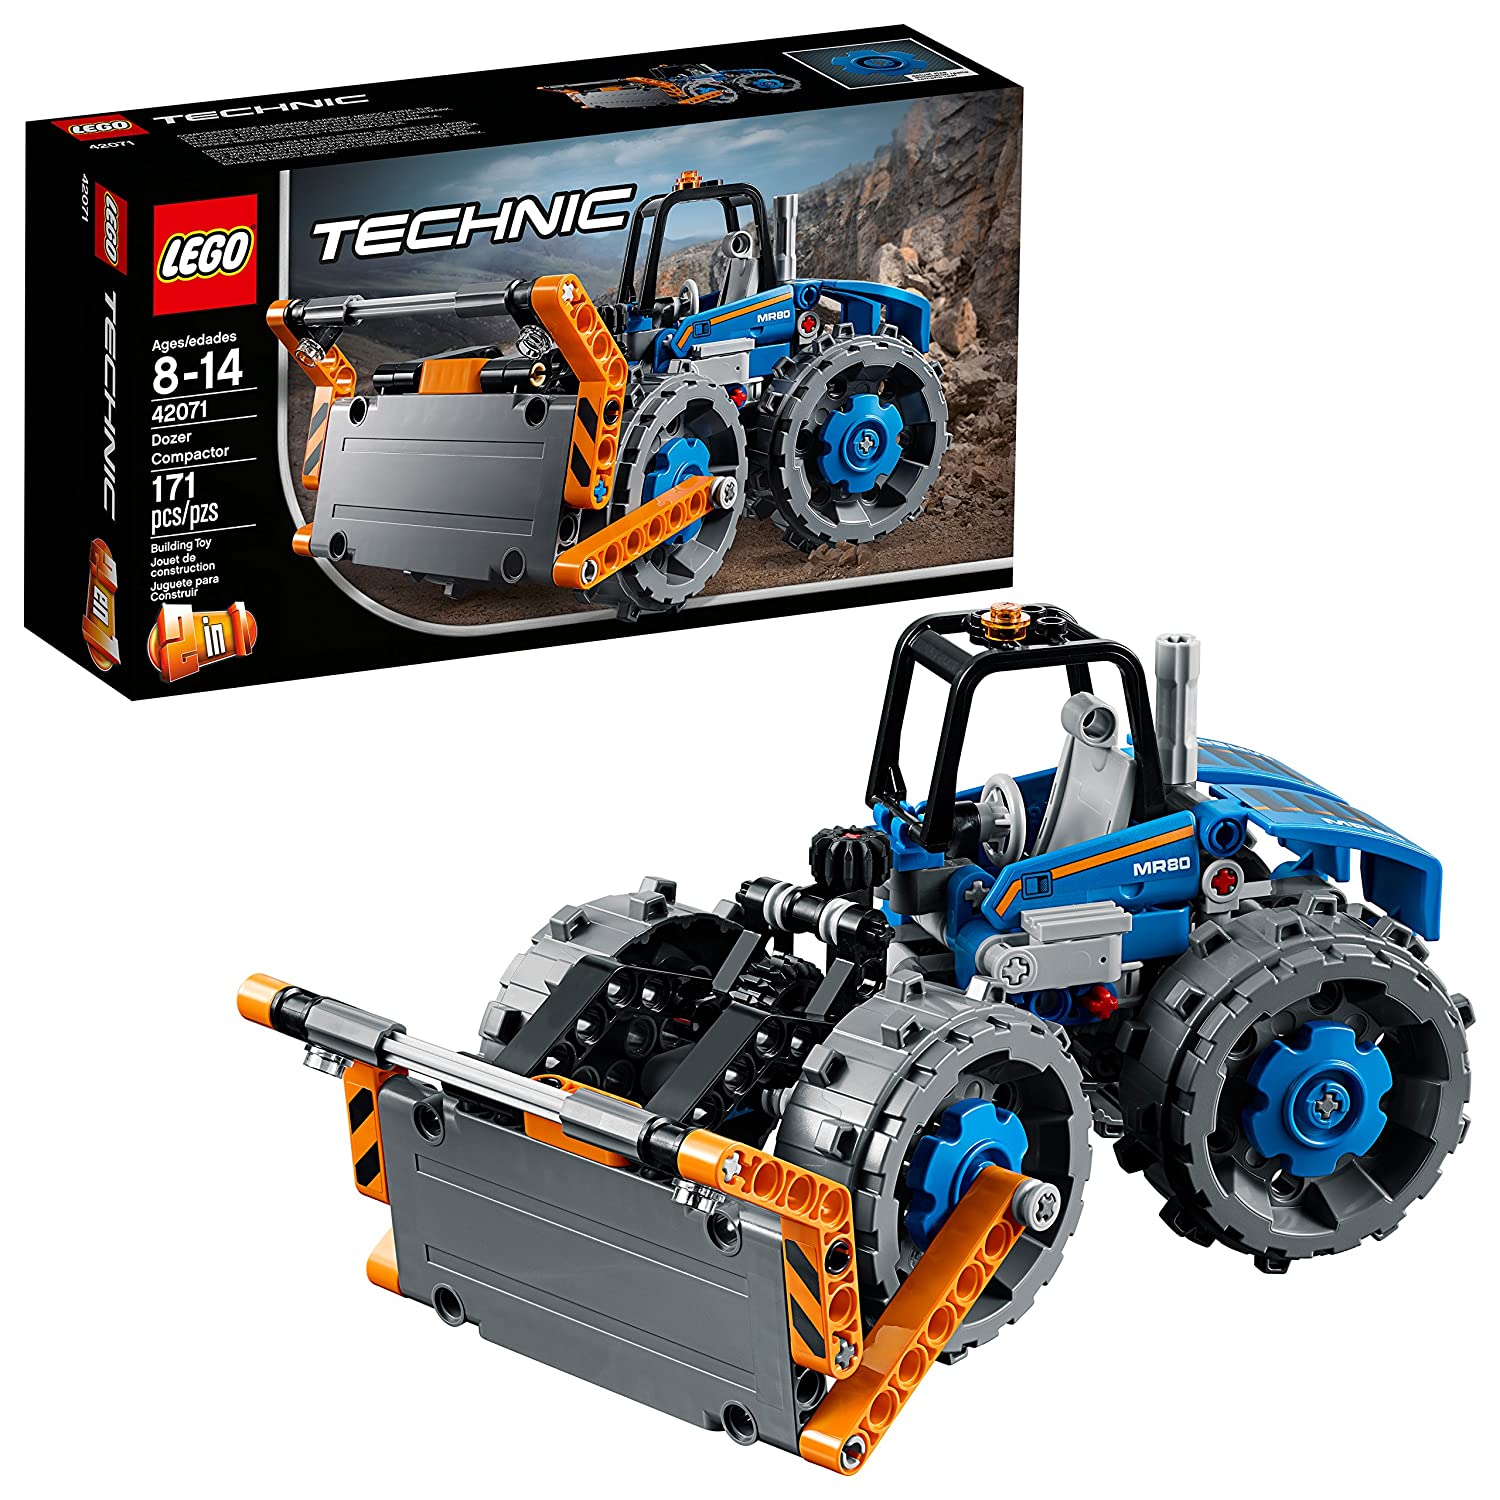 LEGO Technic Dozer Compactor 42071 Building Kit